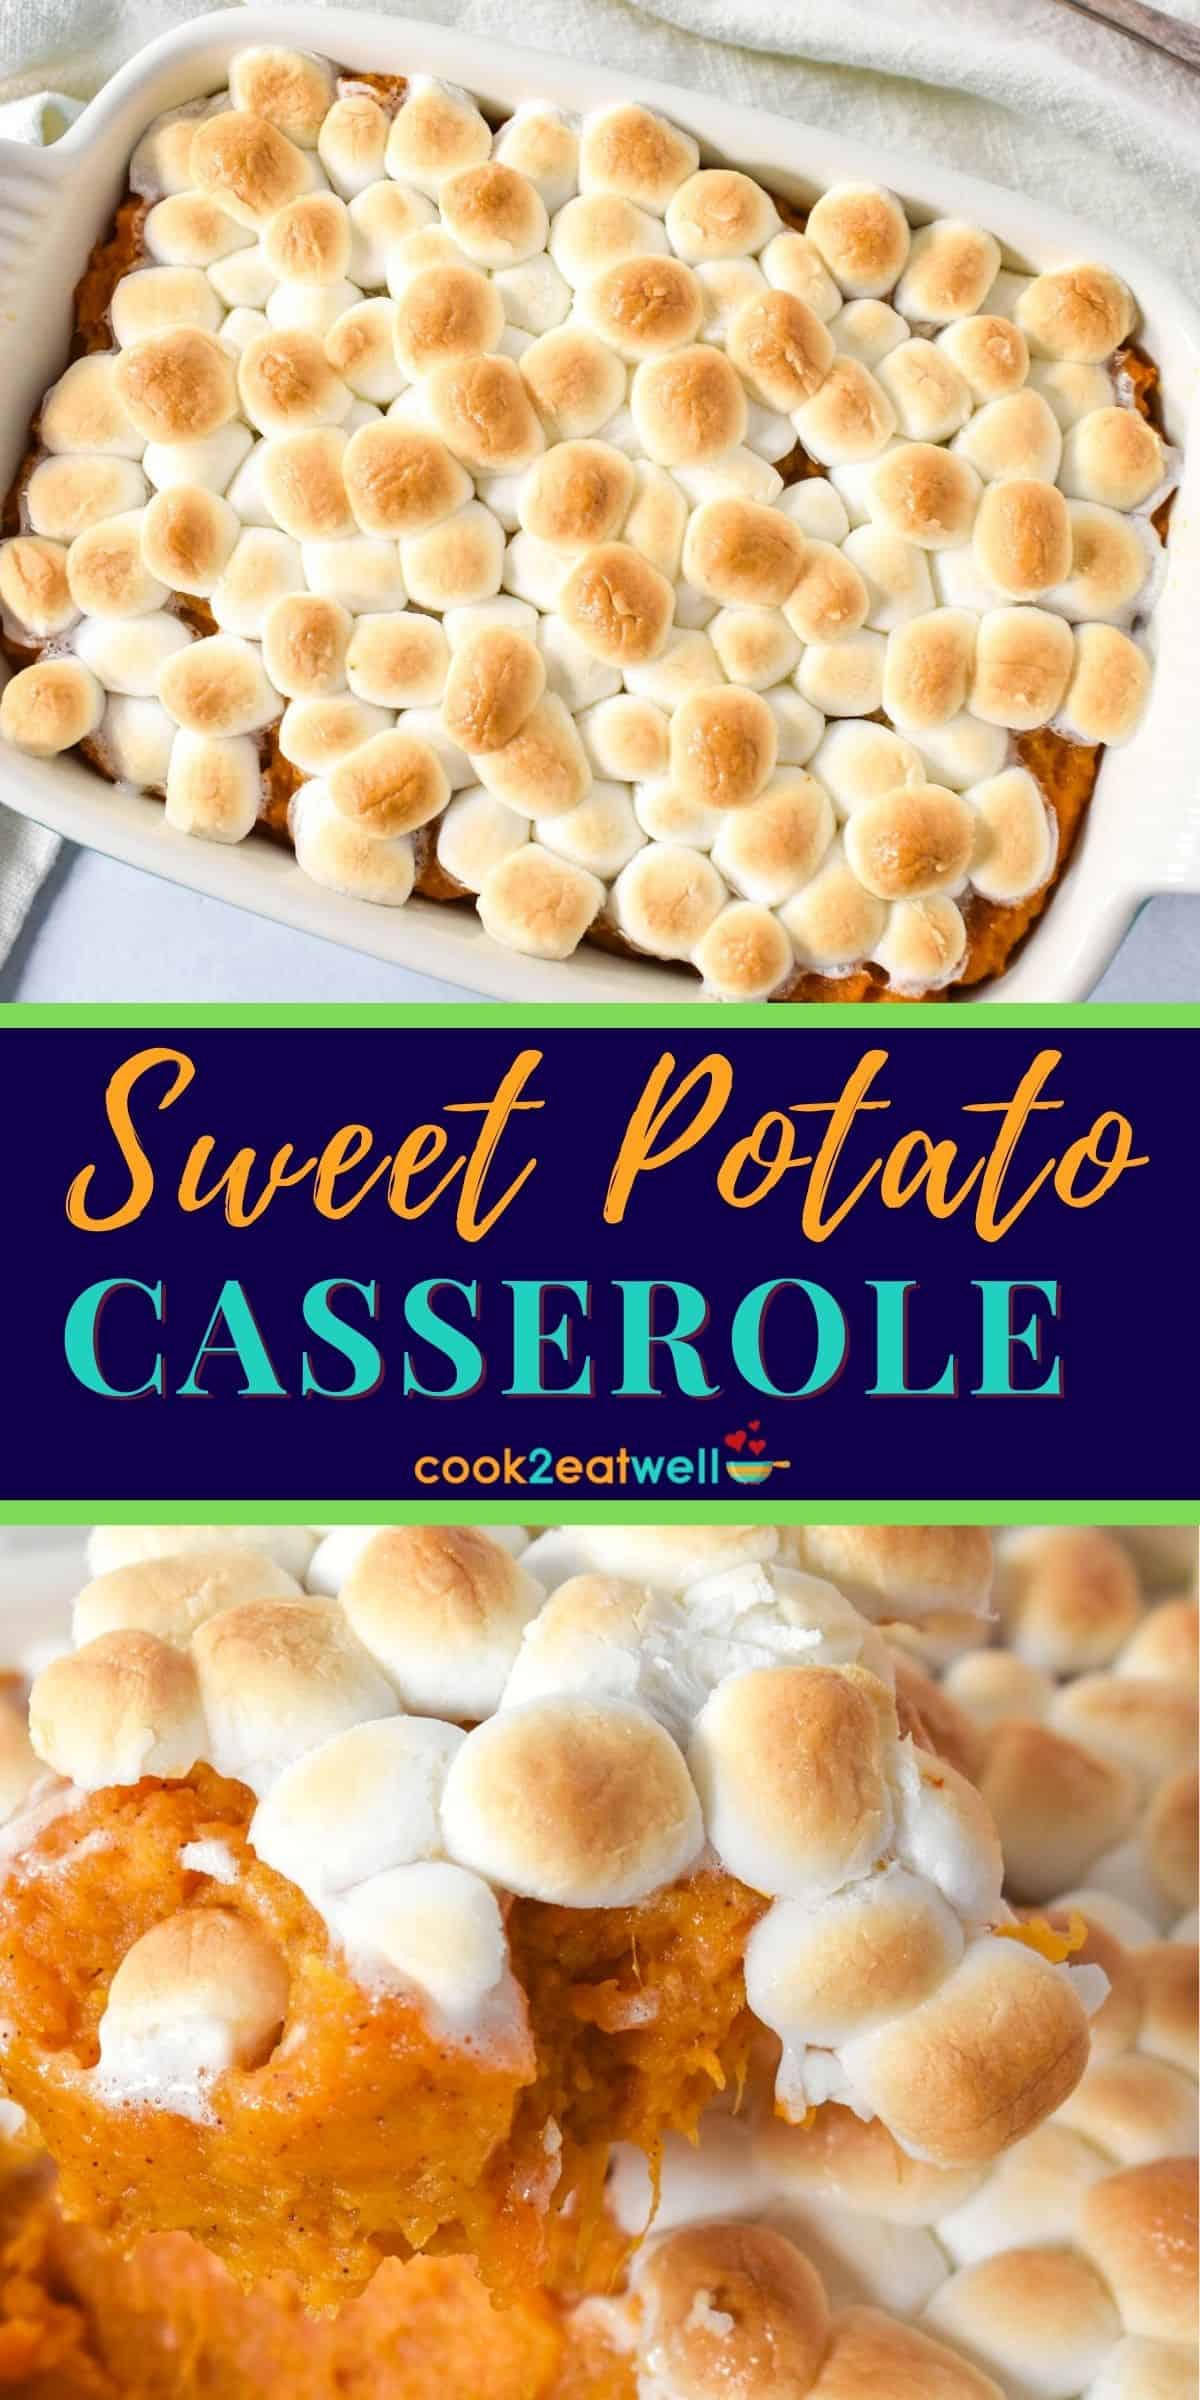 Sweet Potato Casserole - Cook2eatwell